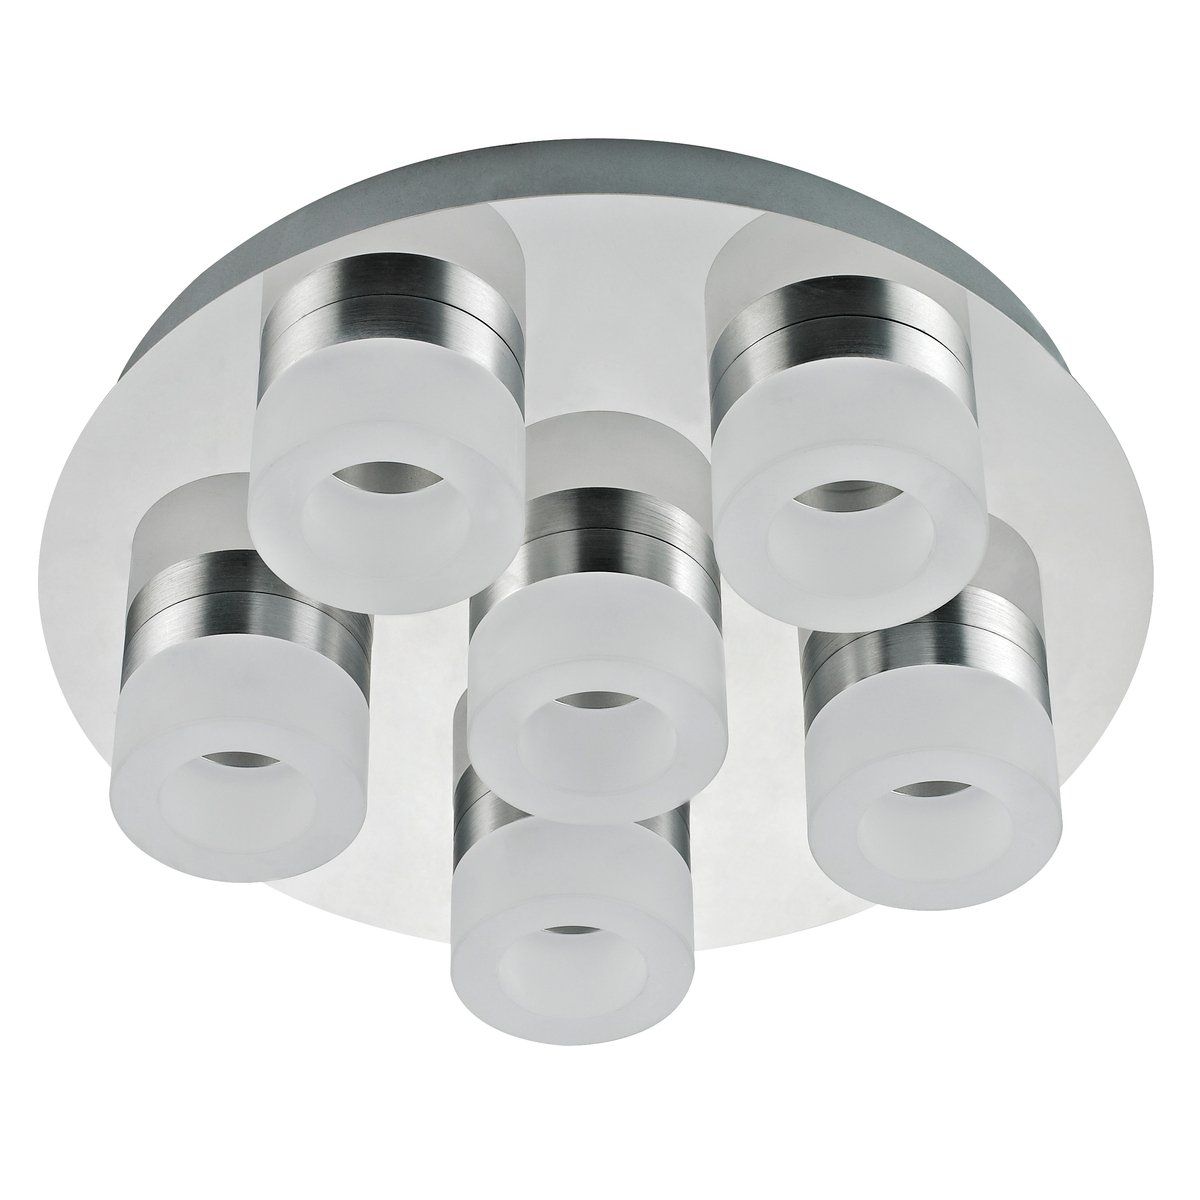 Plafonnier 6 spots LED STEEL en métal chrome